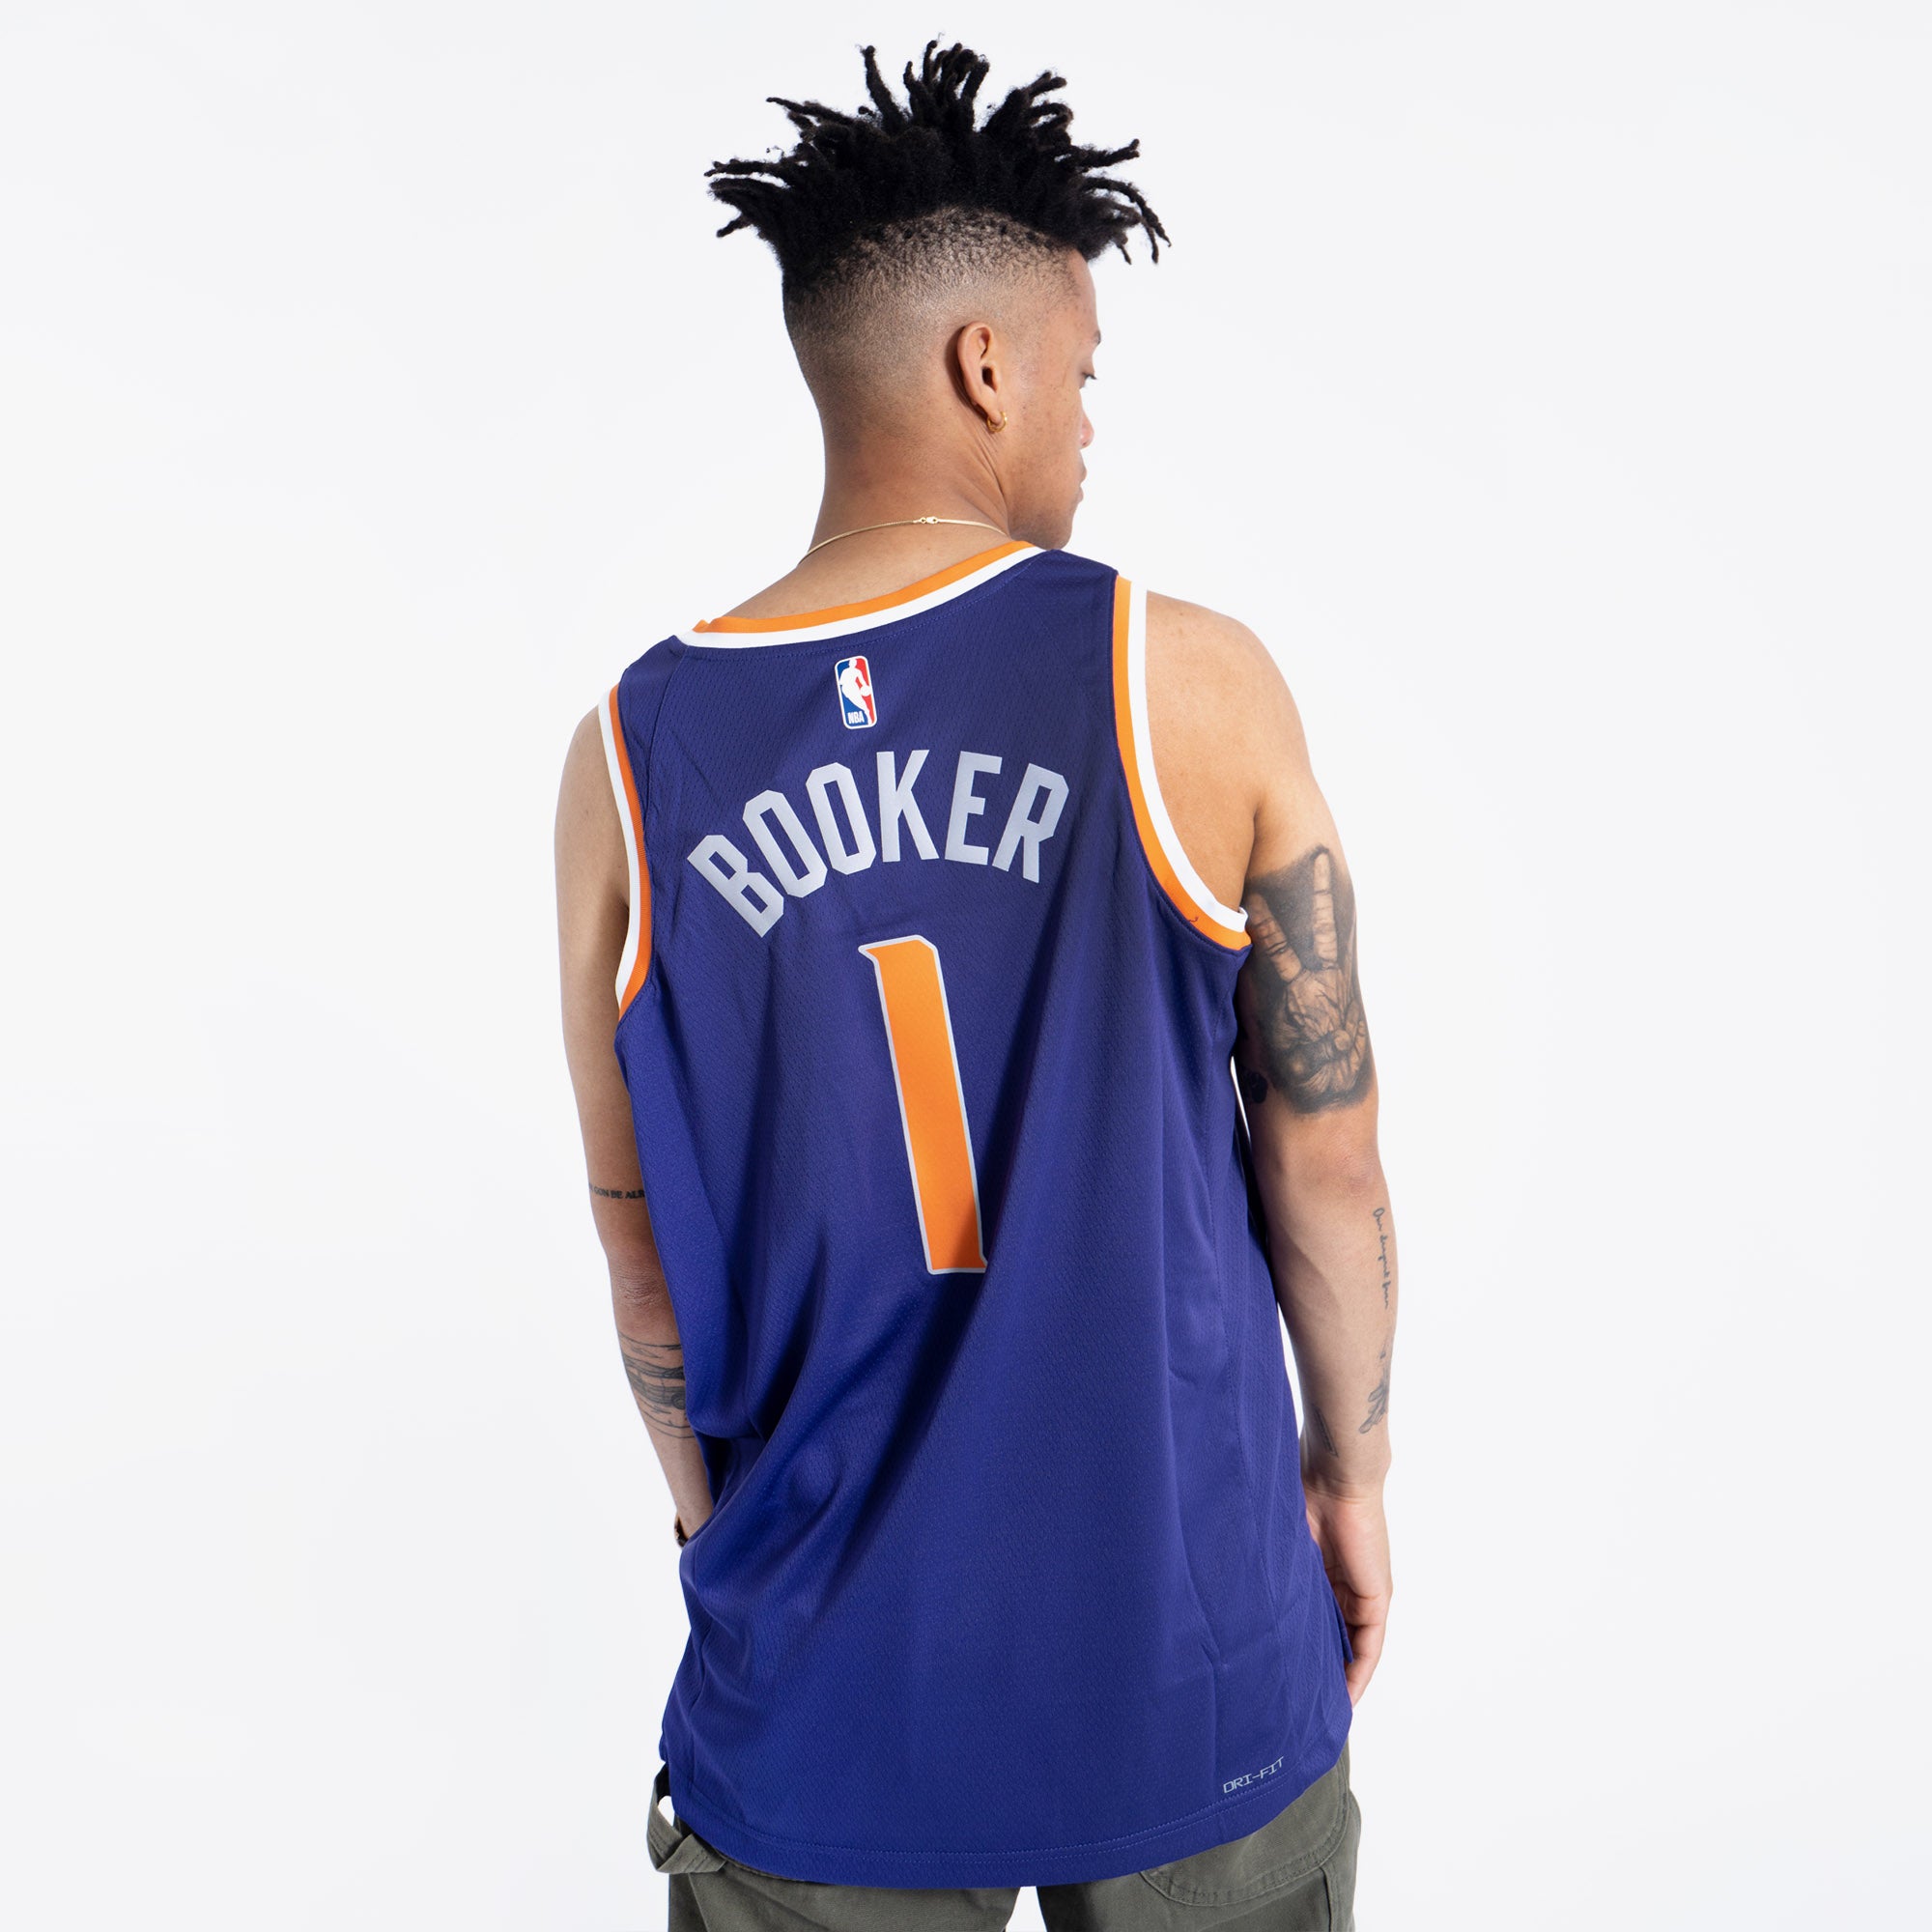 Devin Booker Phoenix Suns Jordan Brand 2020/21 Swingman Jersey - Statement Edition Orange